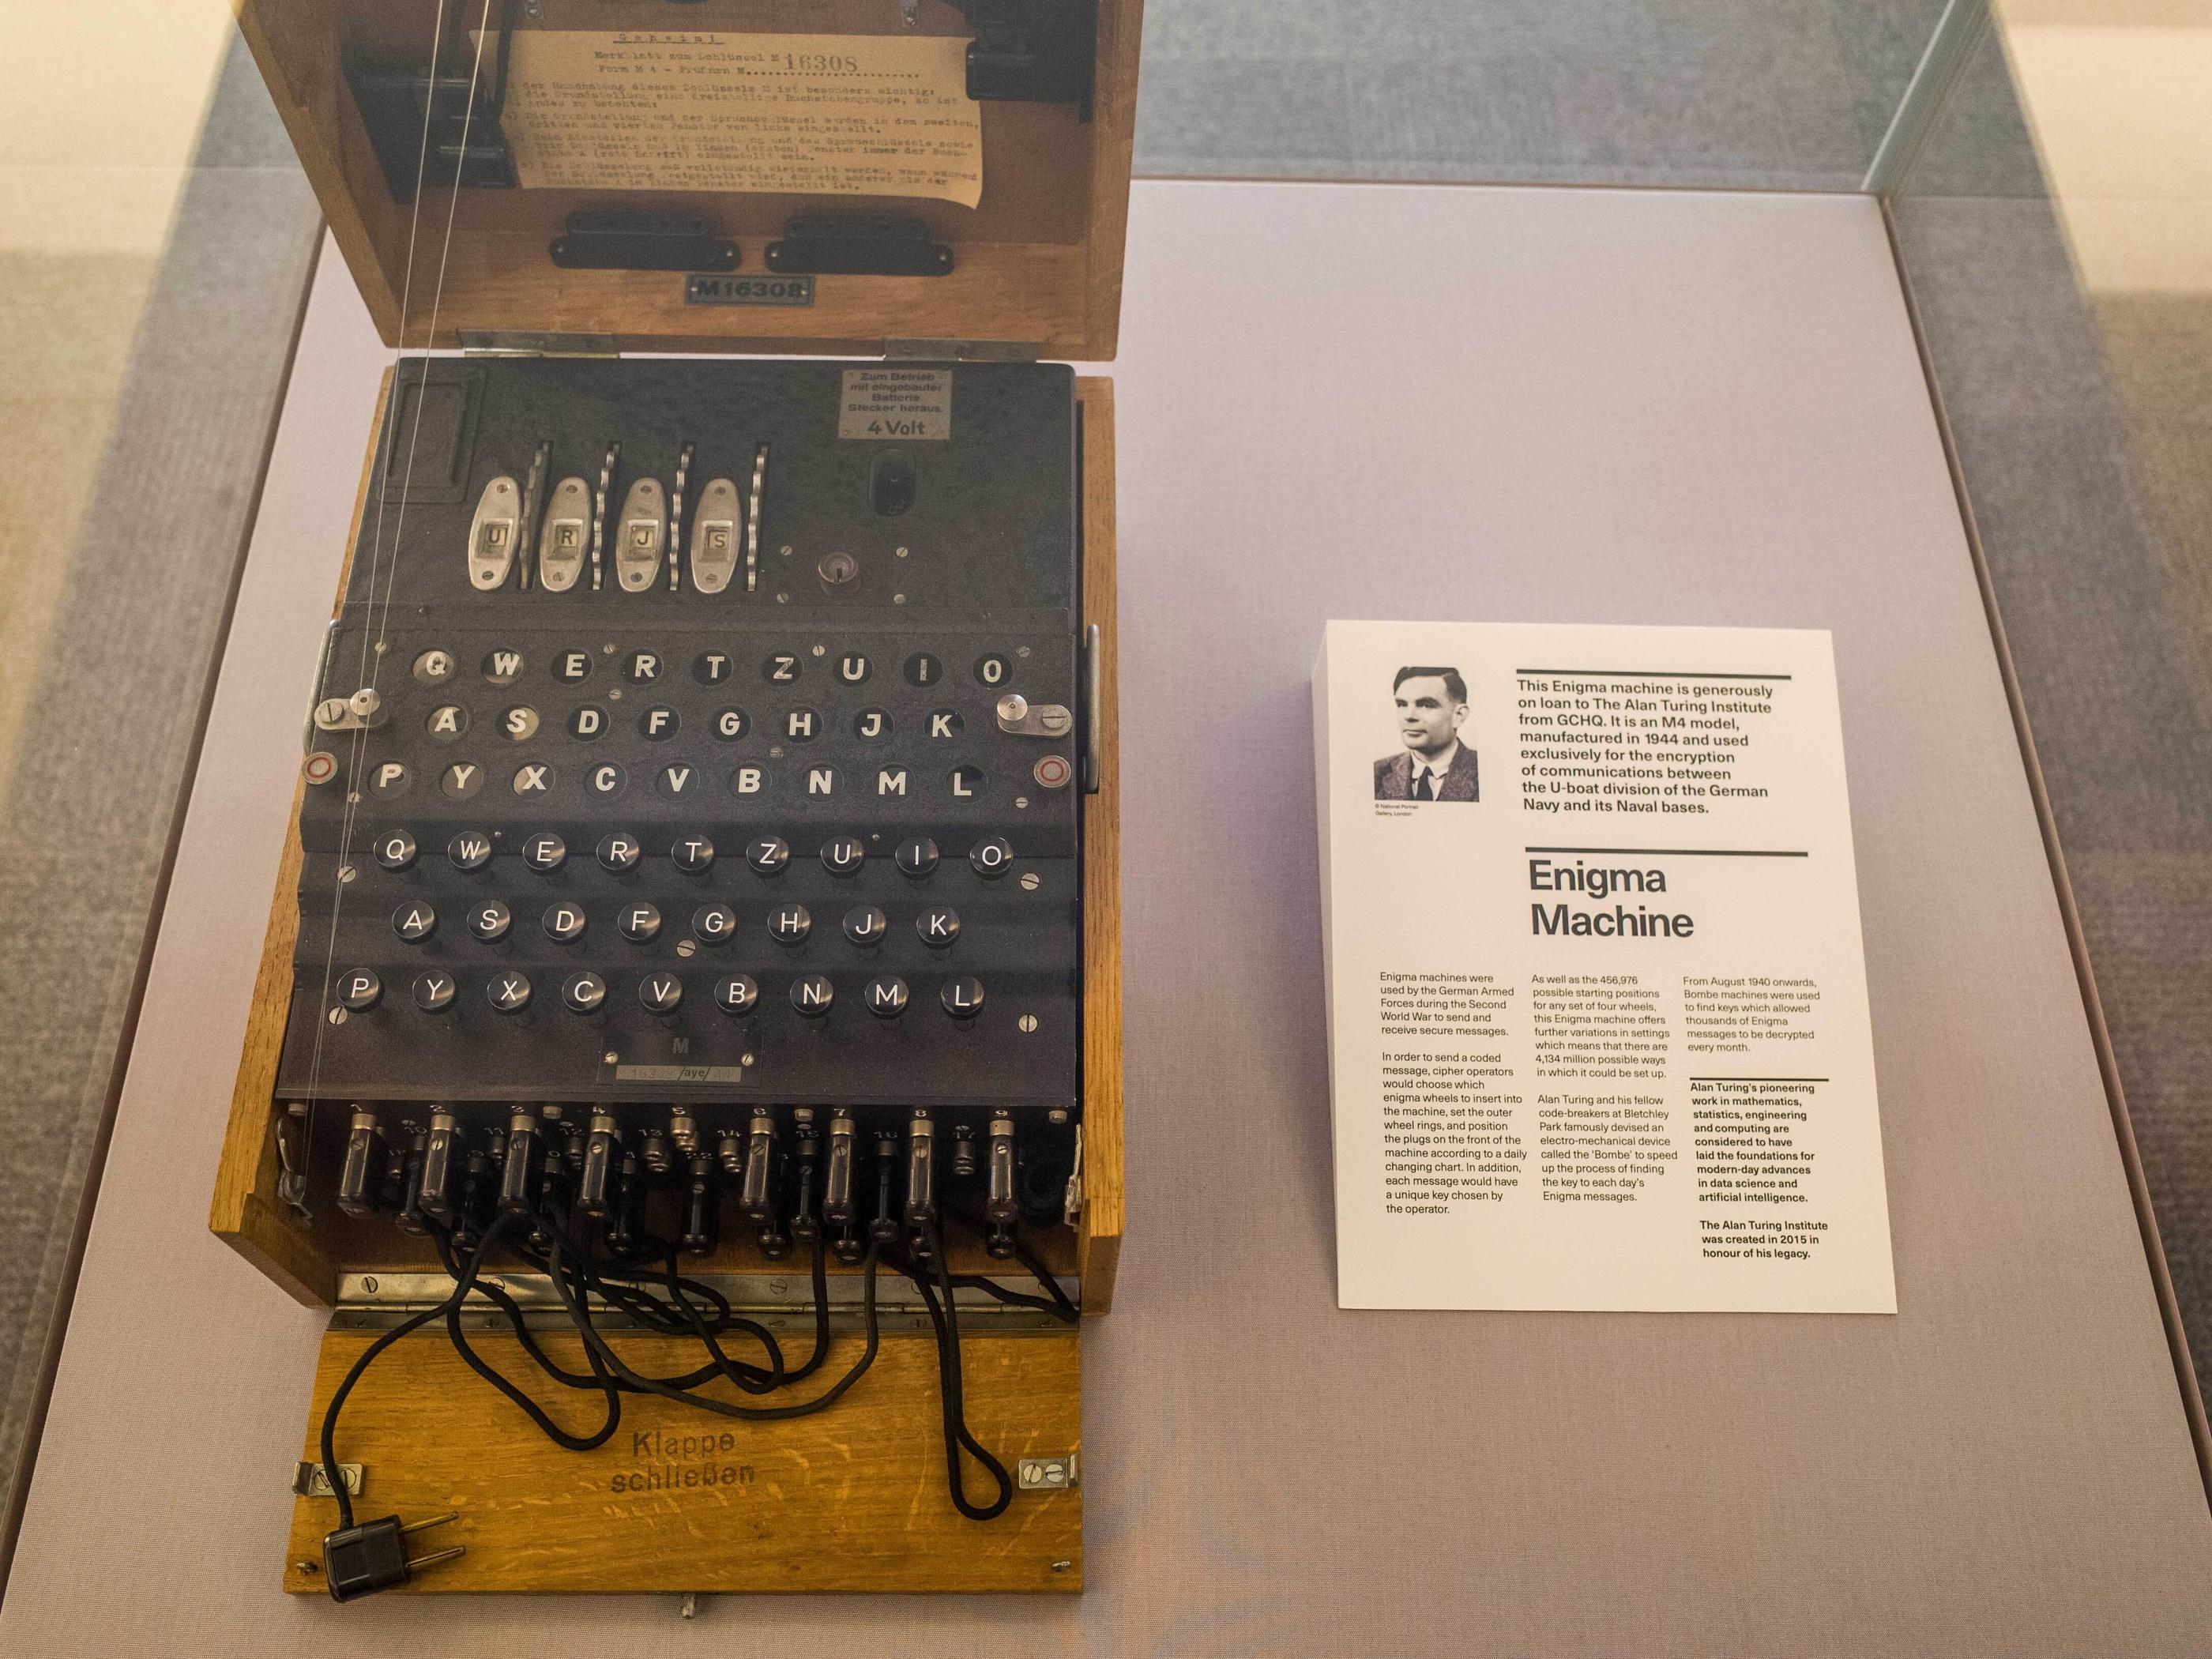 Alan Turing: the enigma